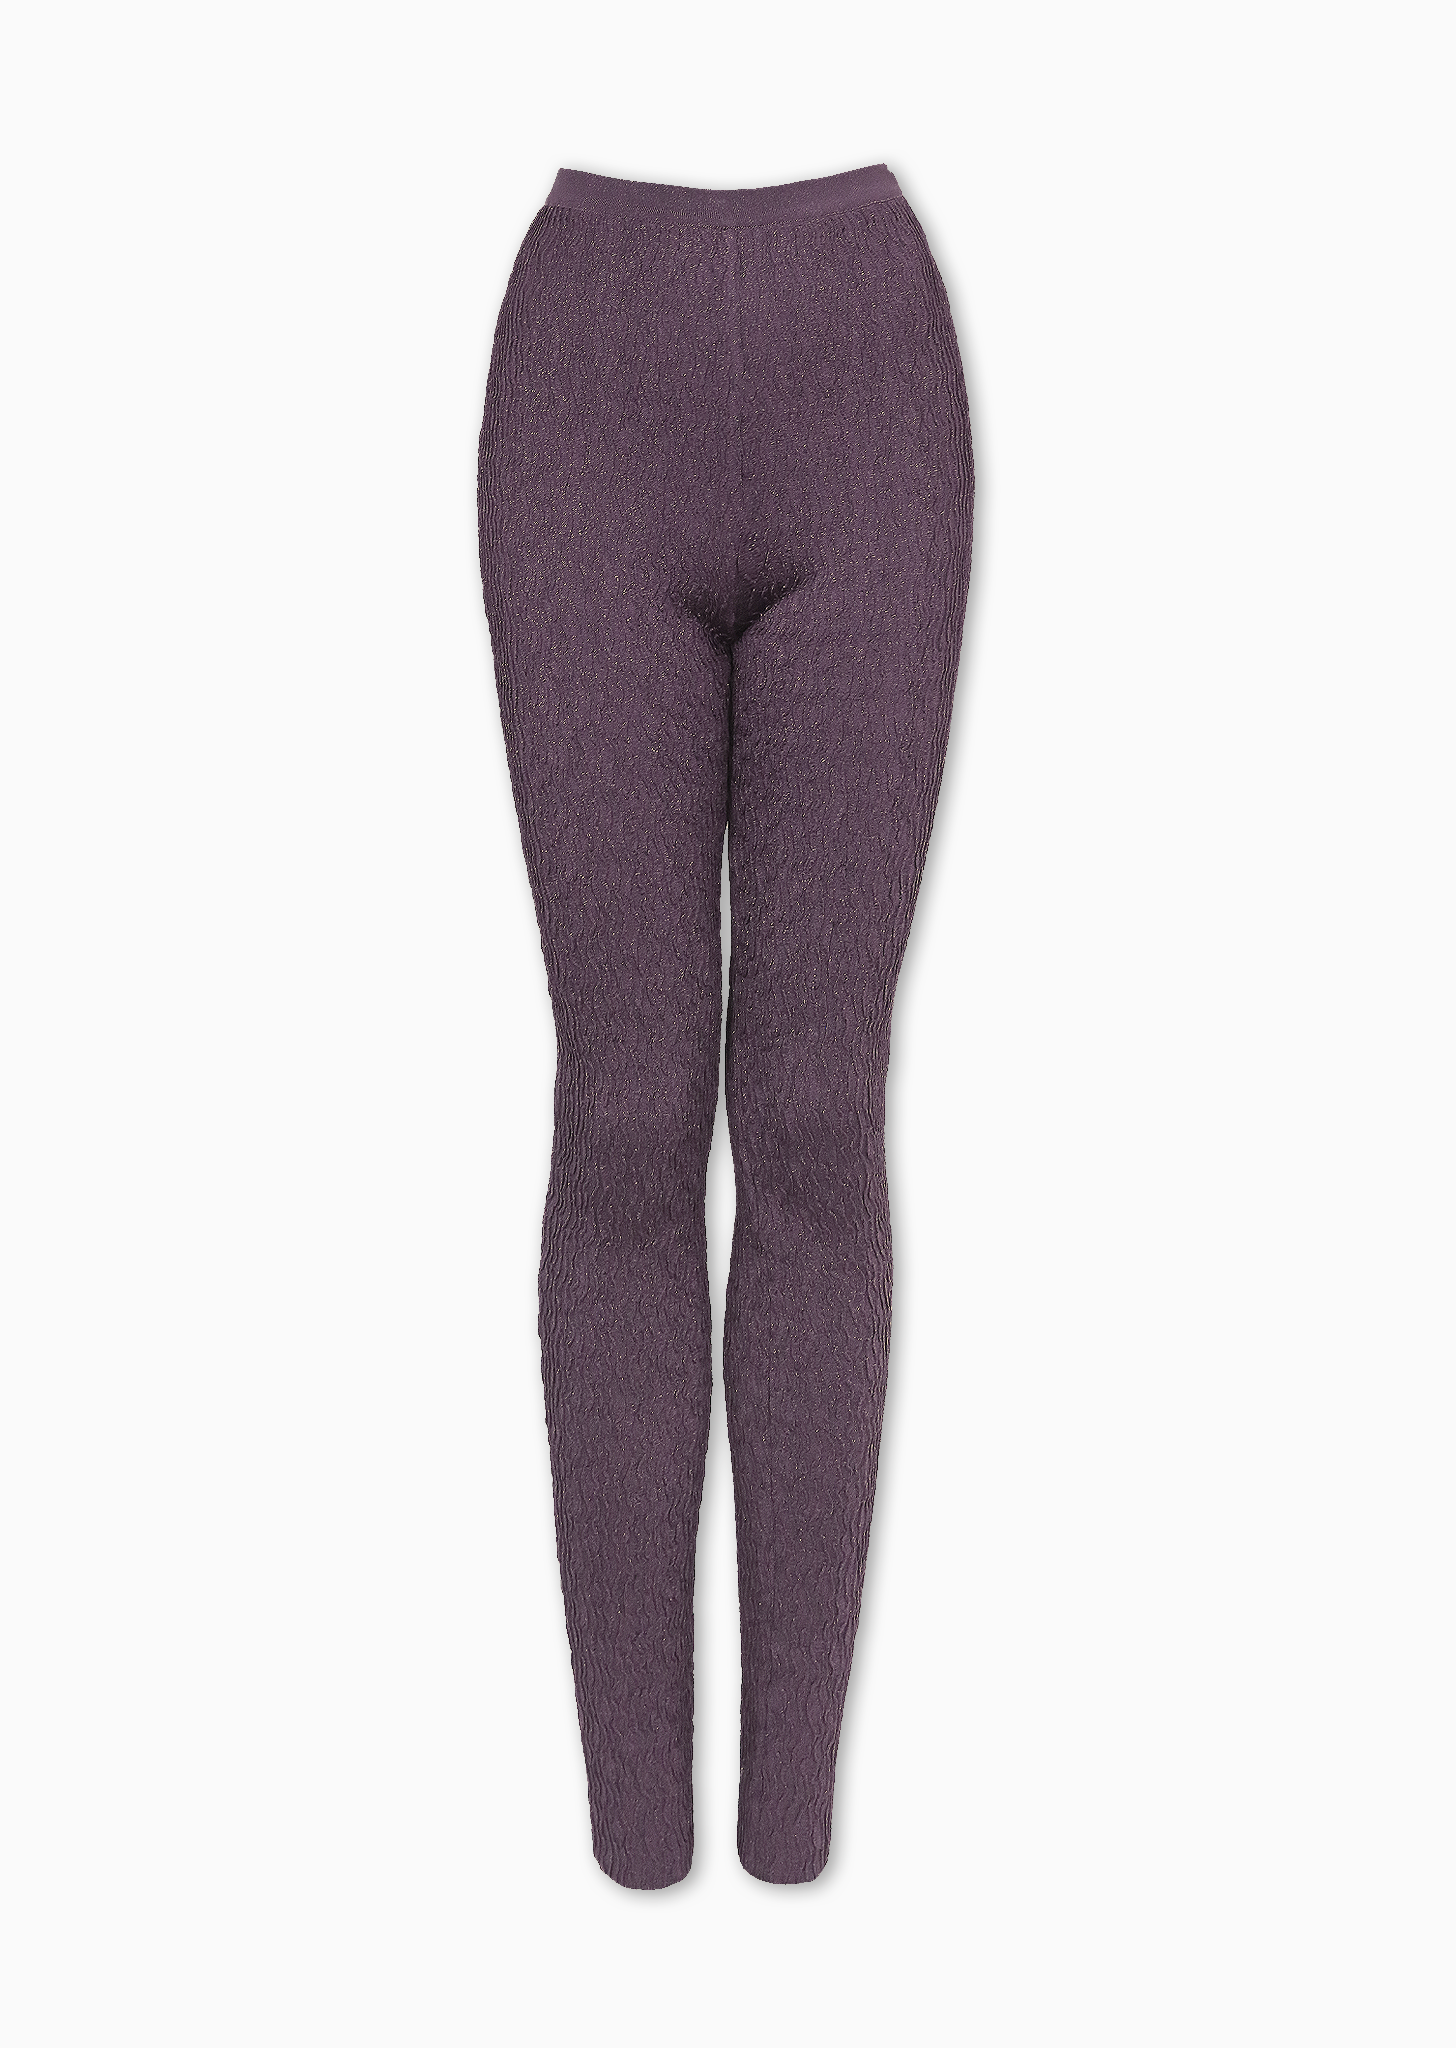 Paula Hian Leona Shimmering Skinny Pant in Textured Wave Design